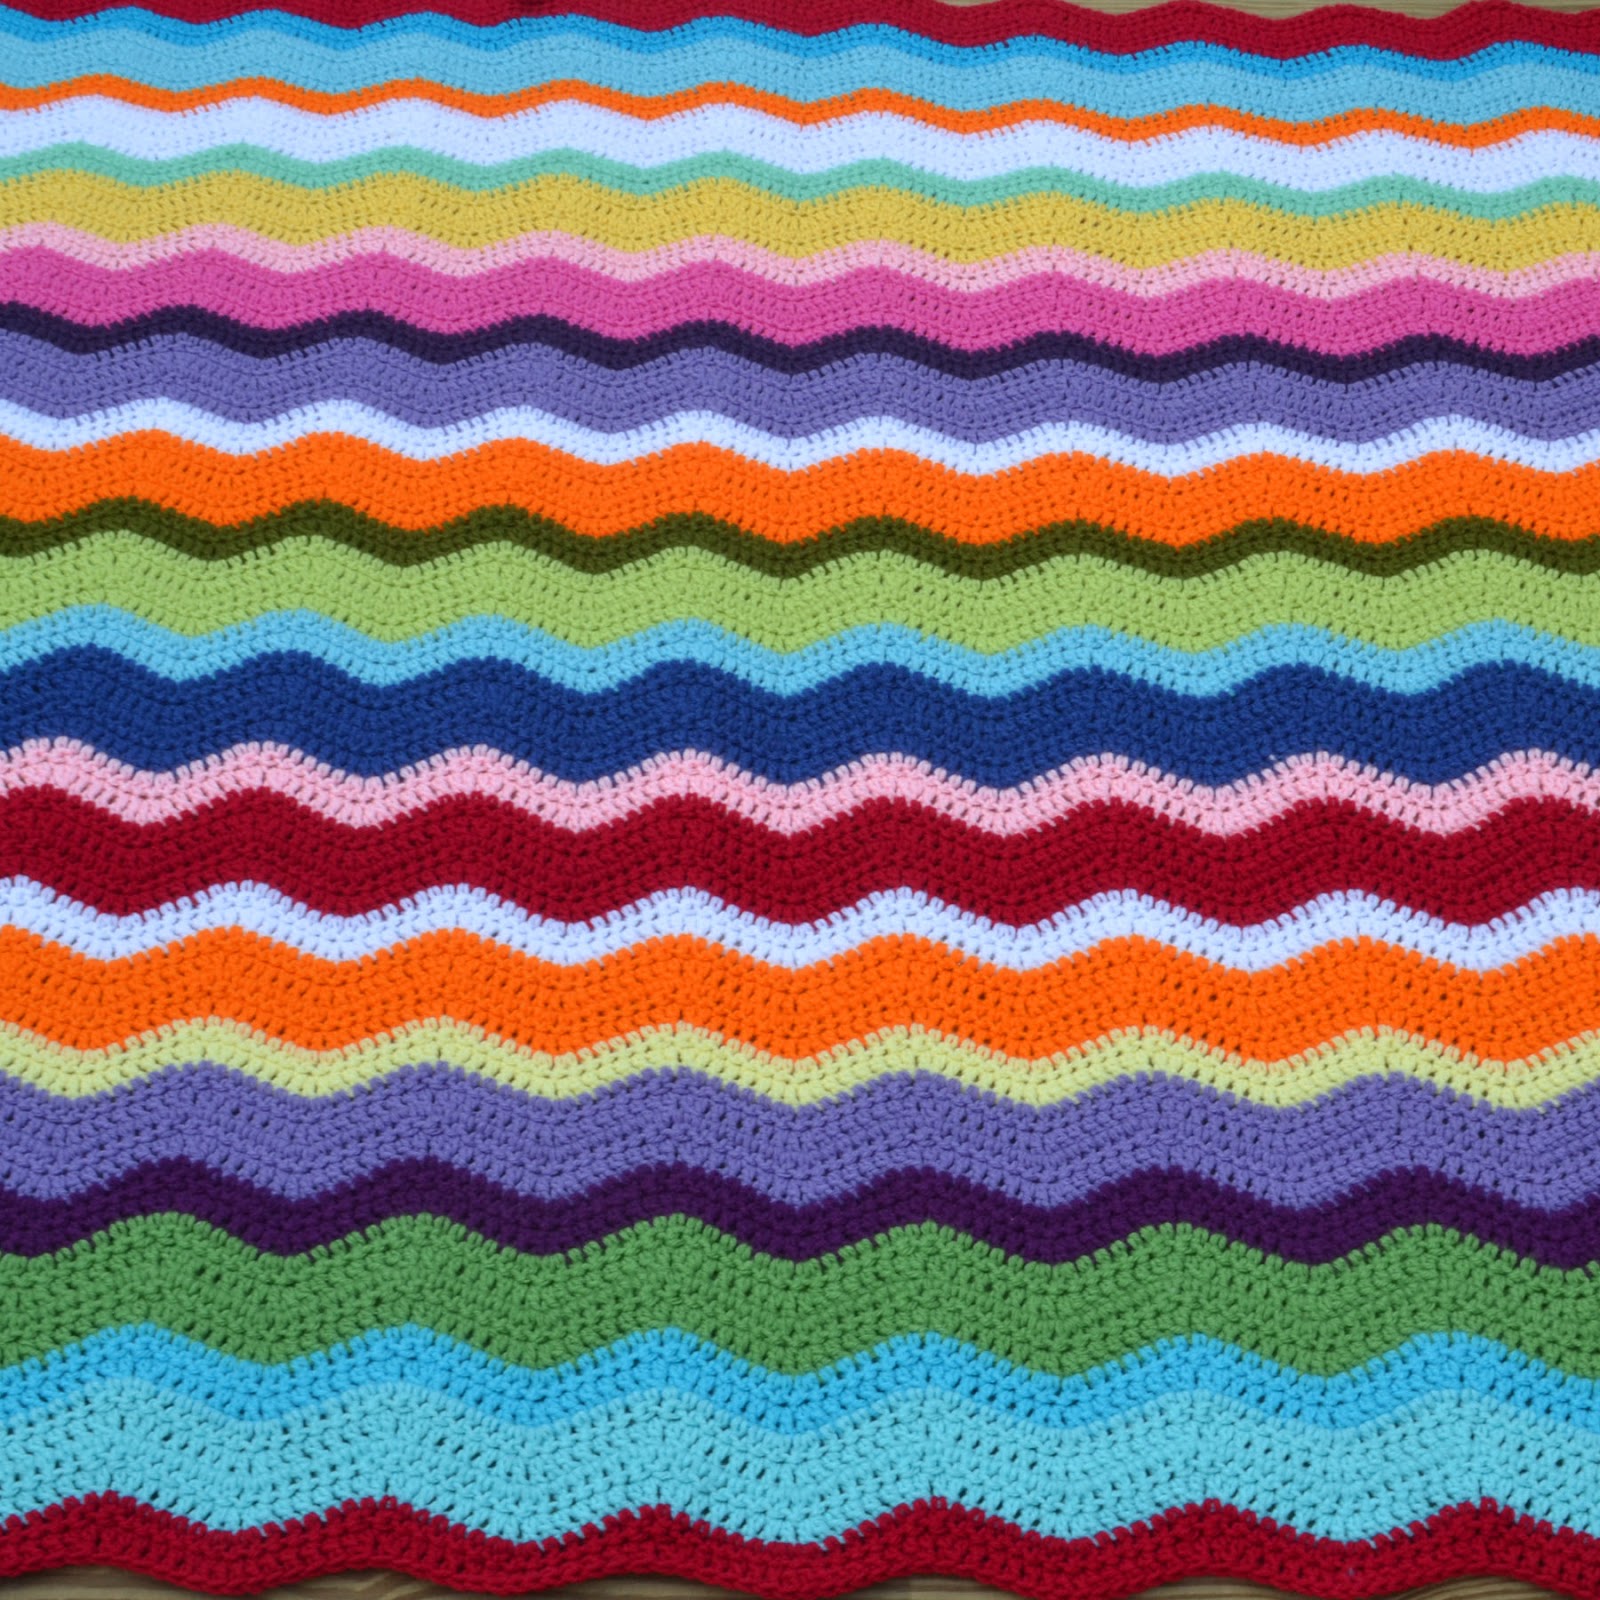 Crochet in Color: Rippling Again